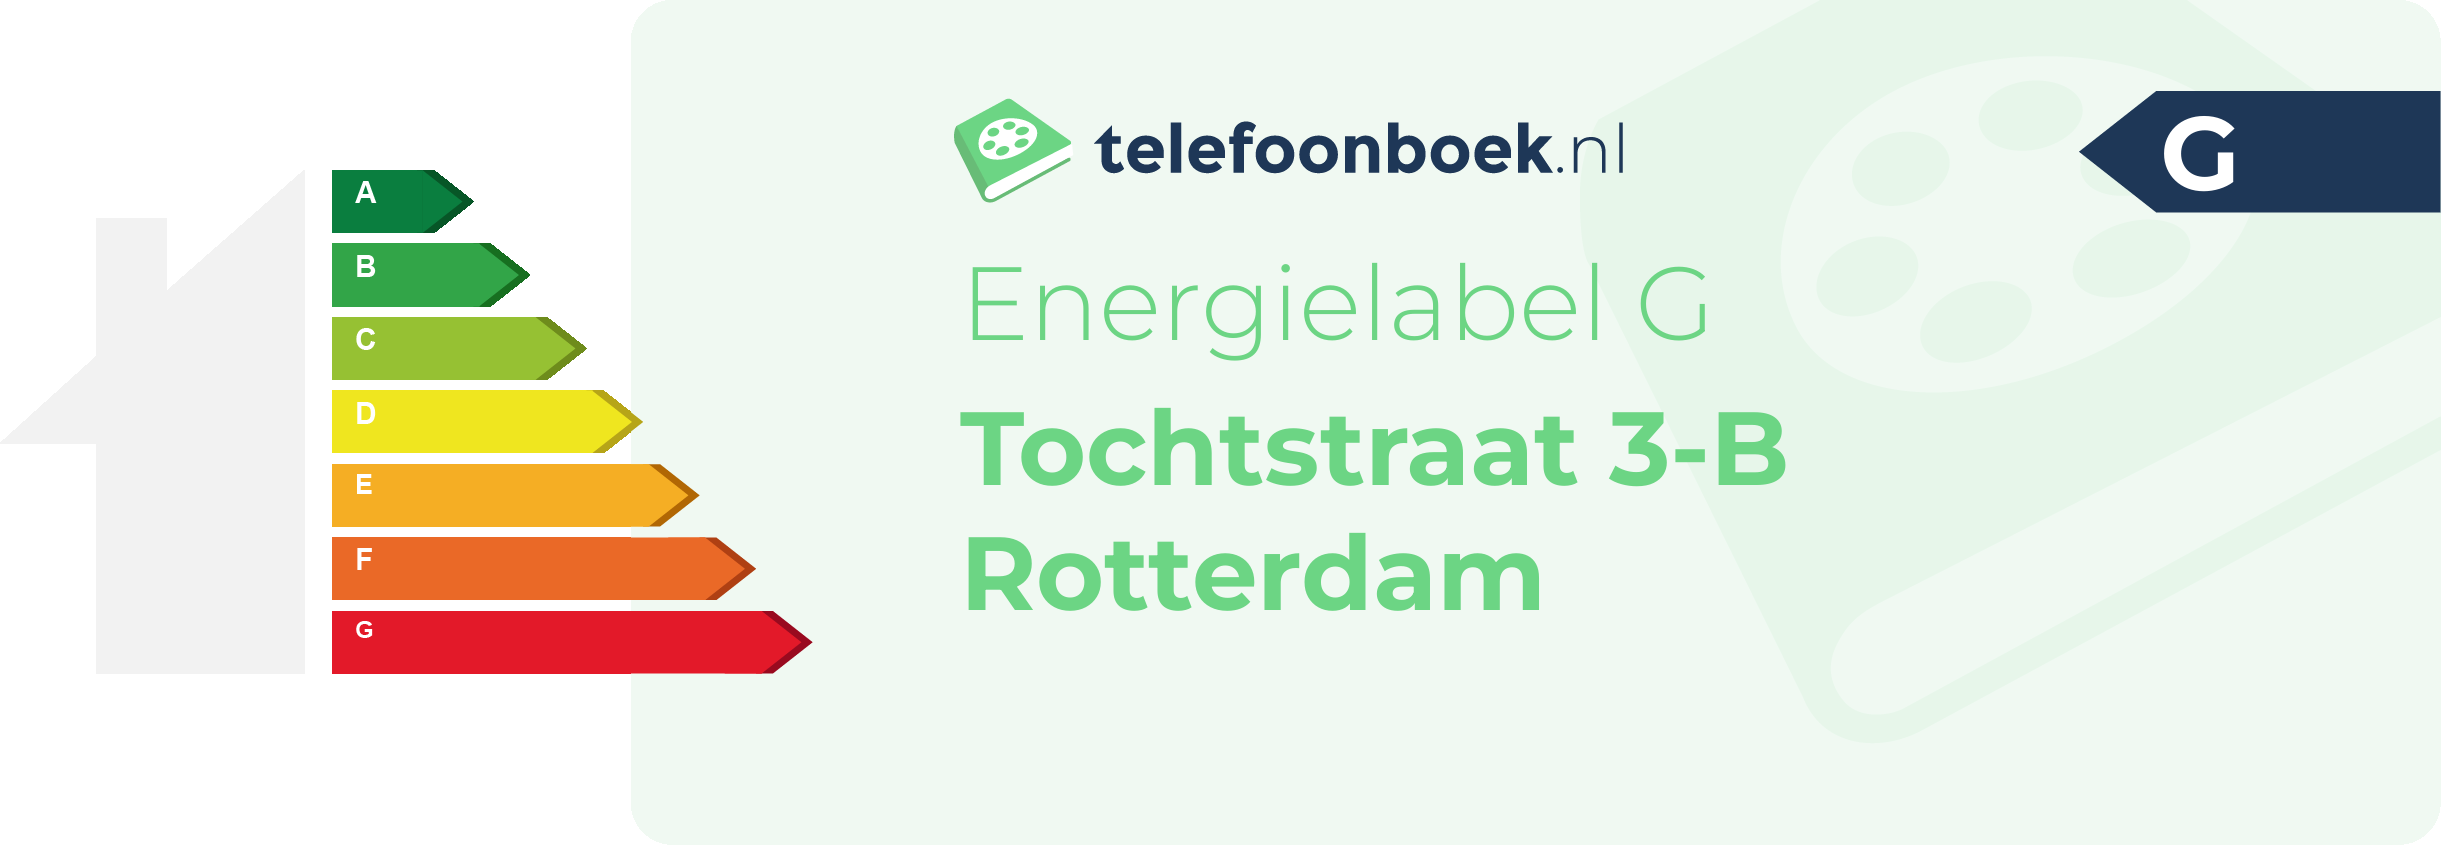 Energielabel Tochtstraat 3-B Rotterdam